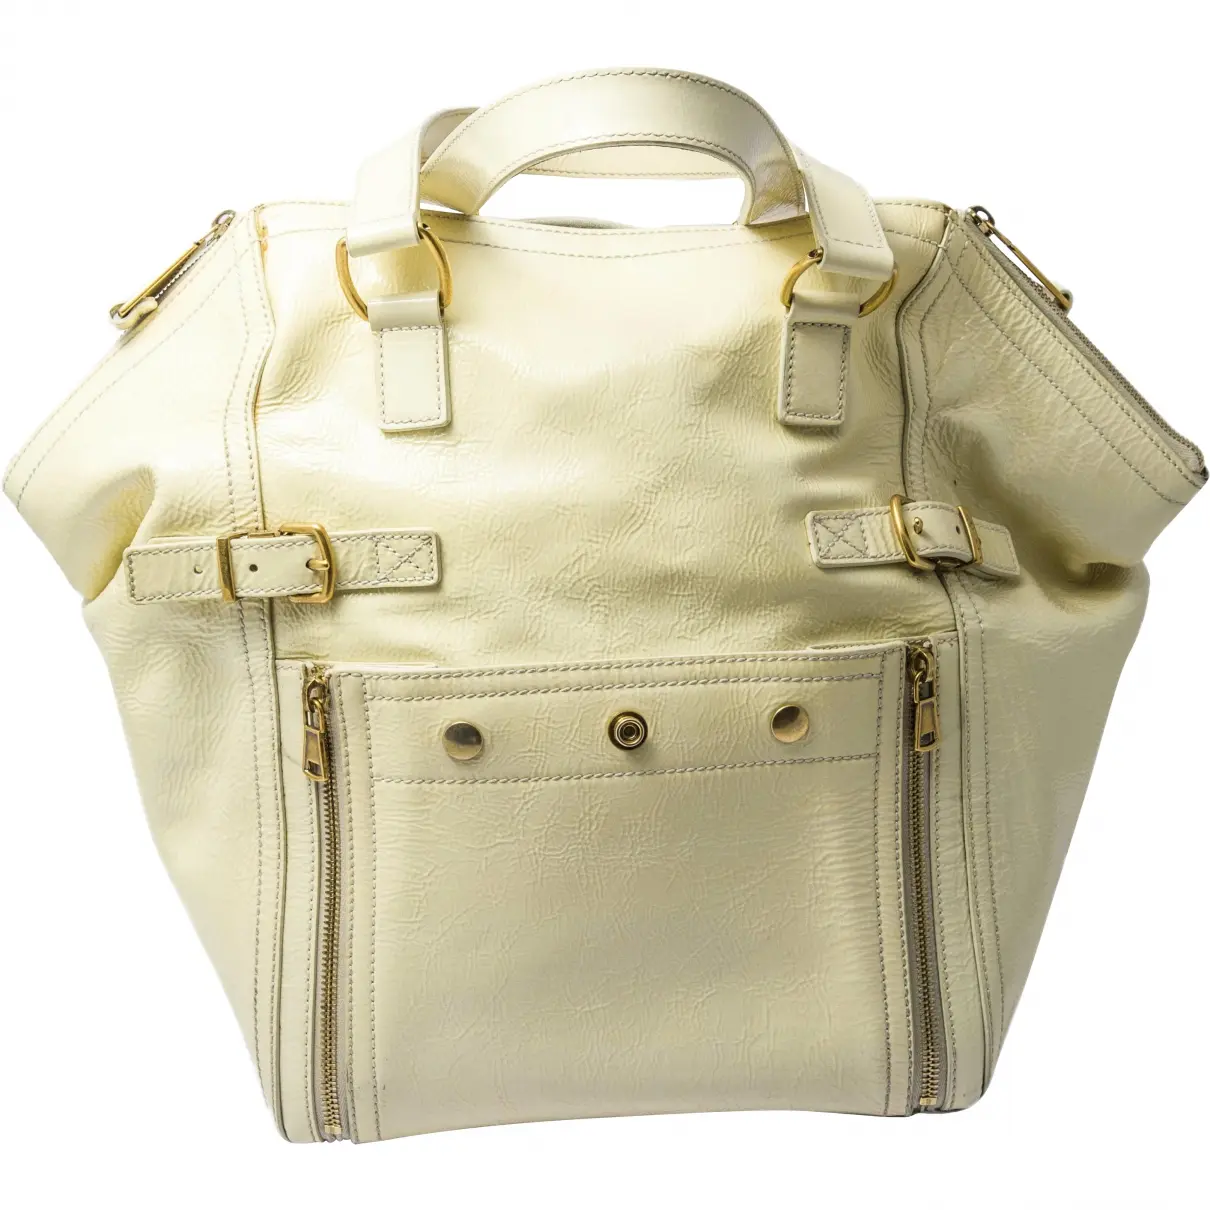 White Patent leather Handbag Downtown Yves Saint Laurent